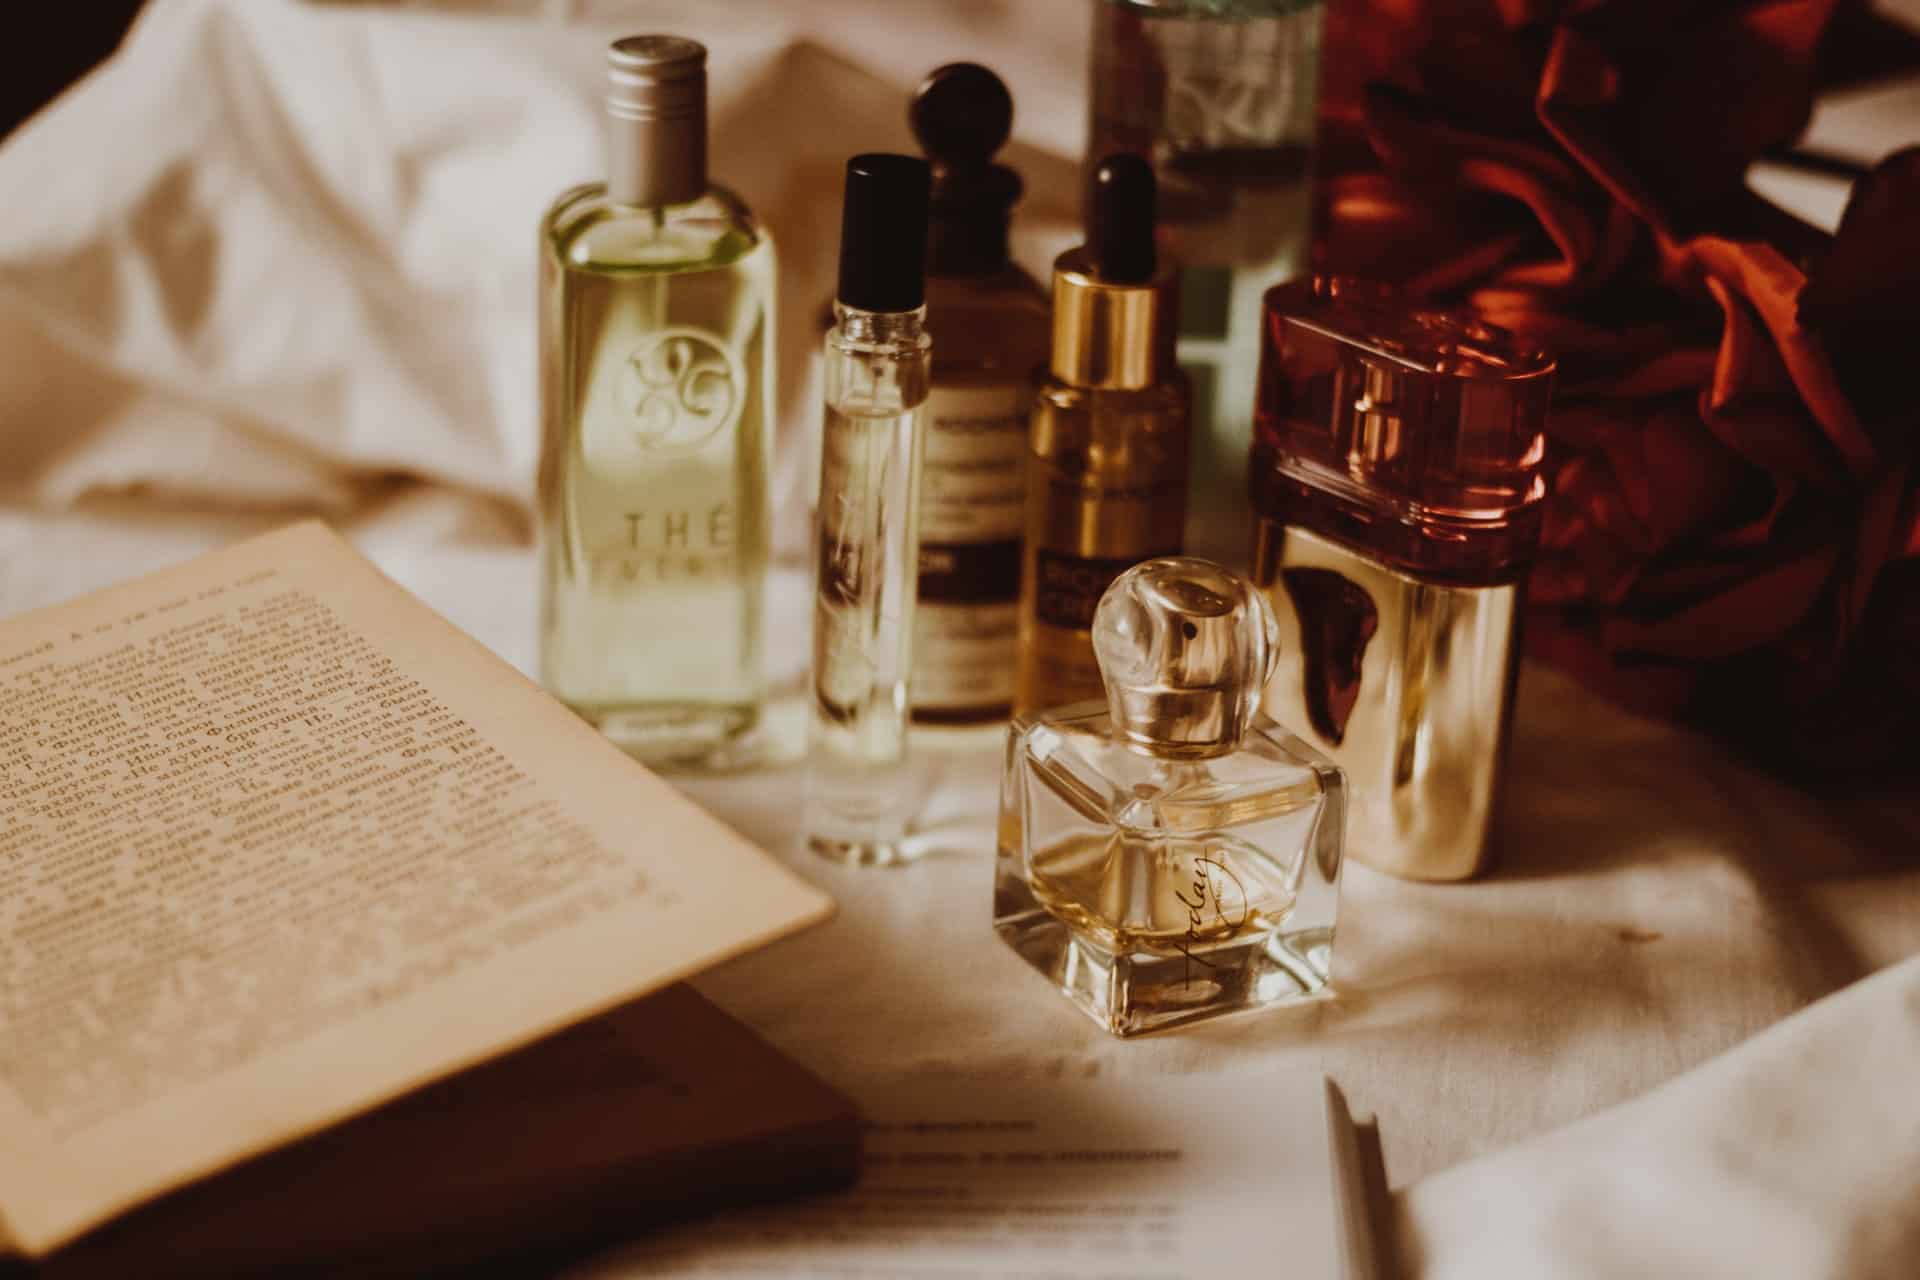 perfume bottles next to book